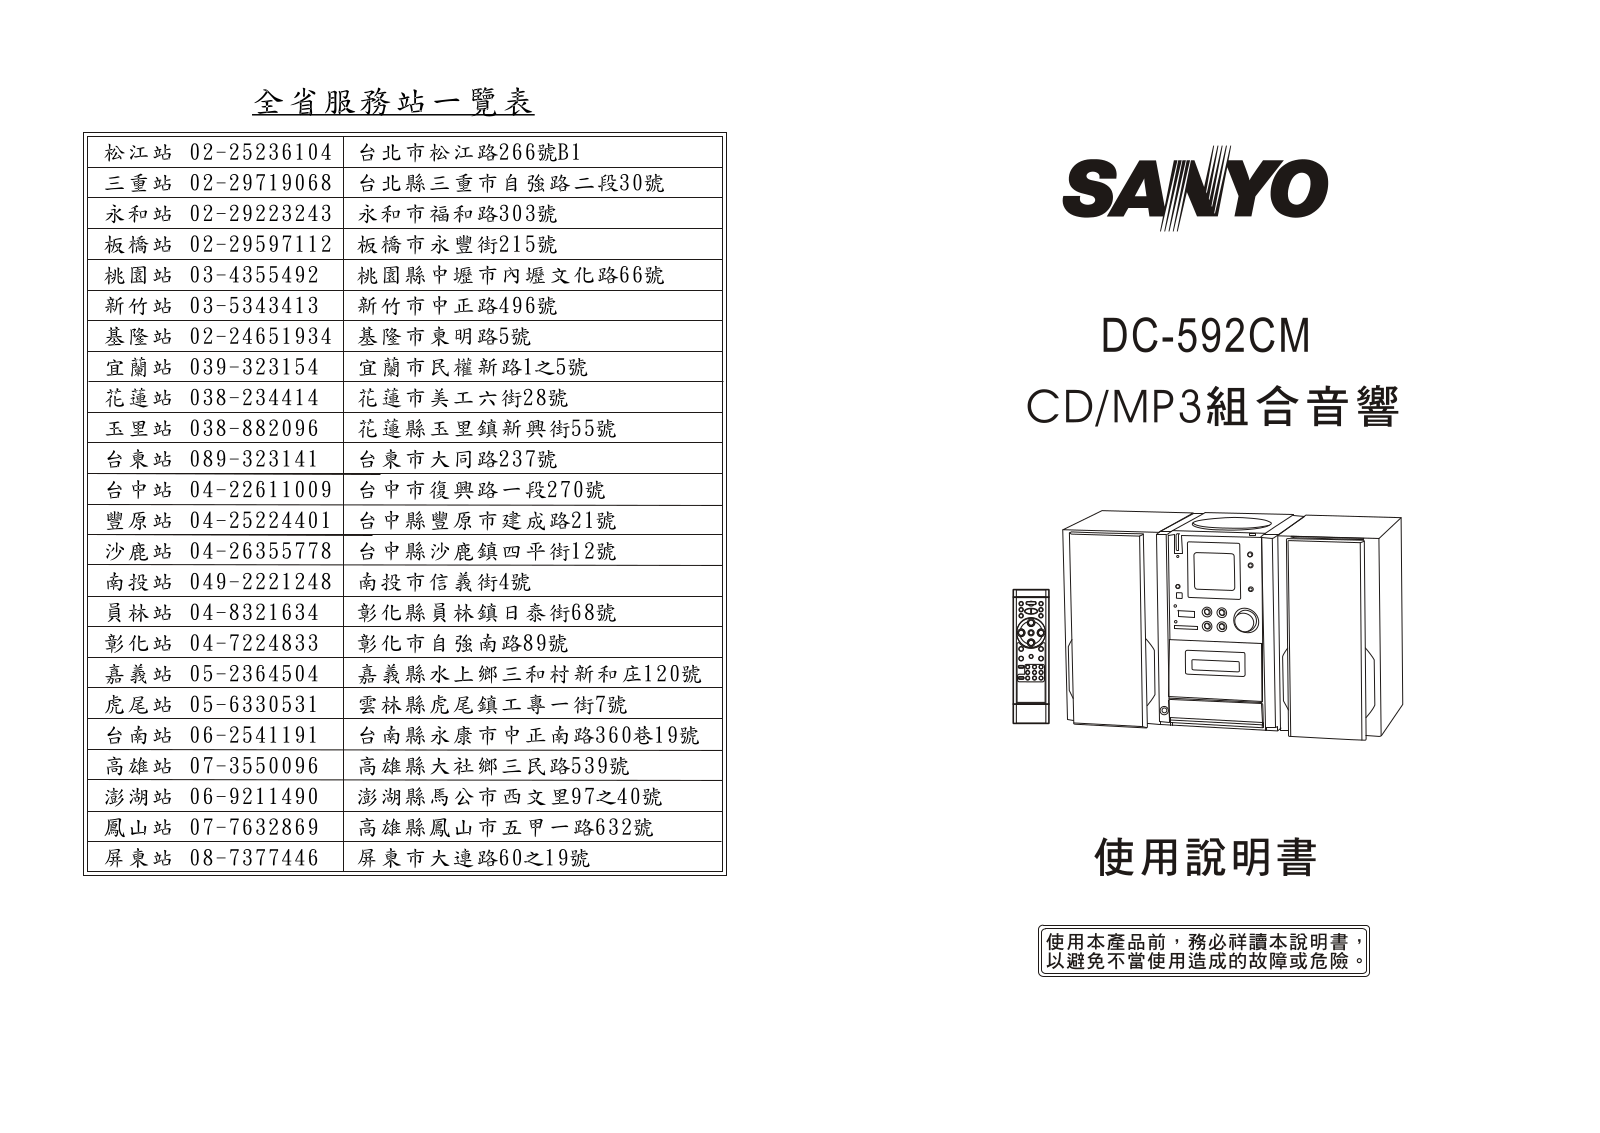 SANYO DC-592CM User Manual